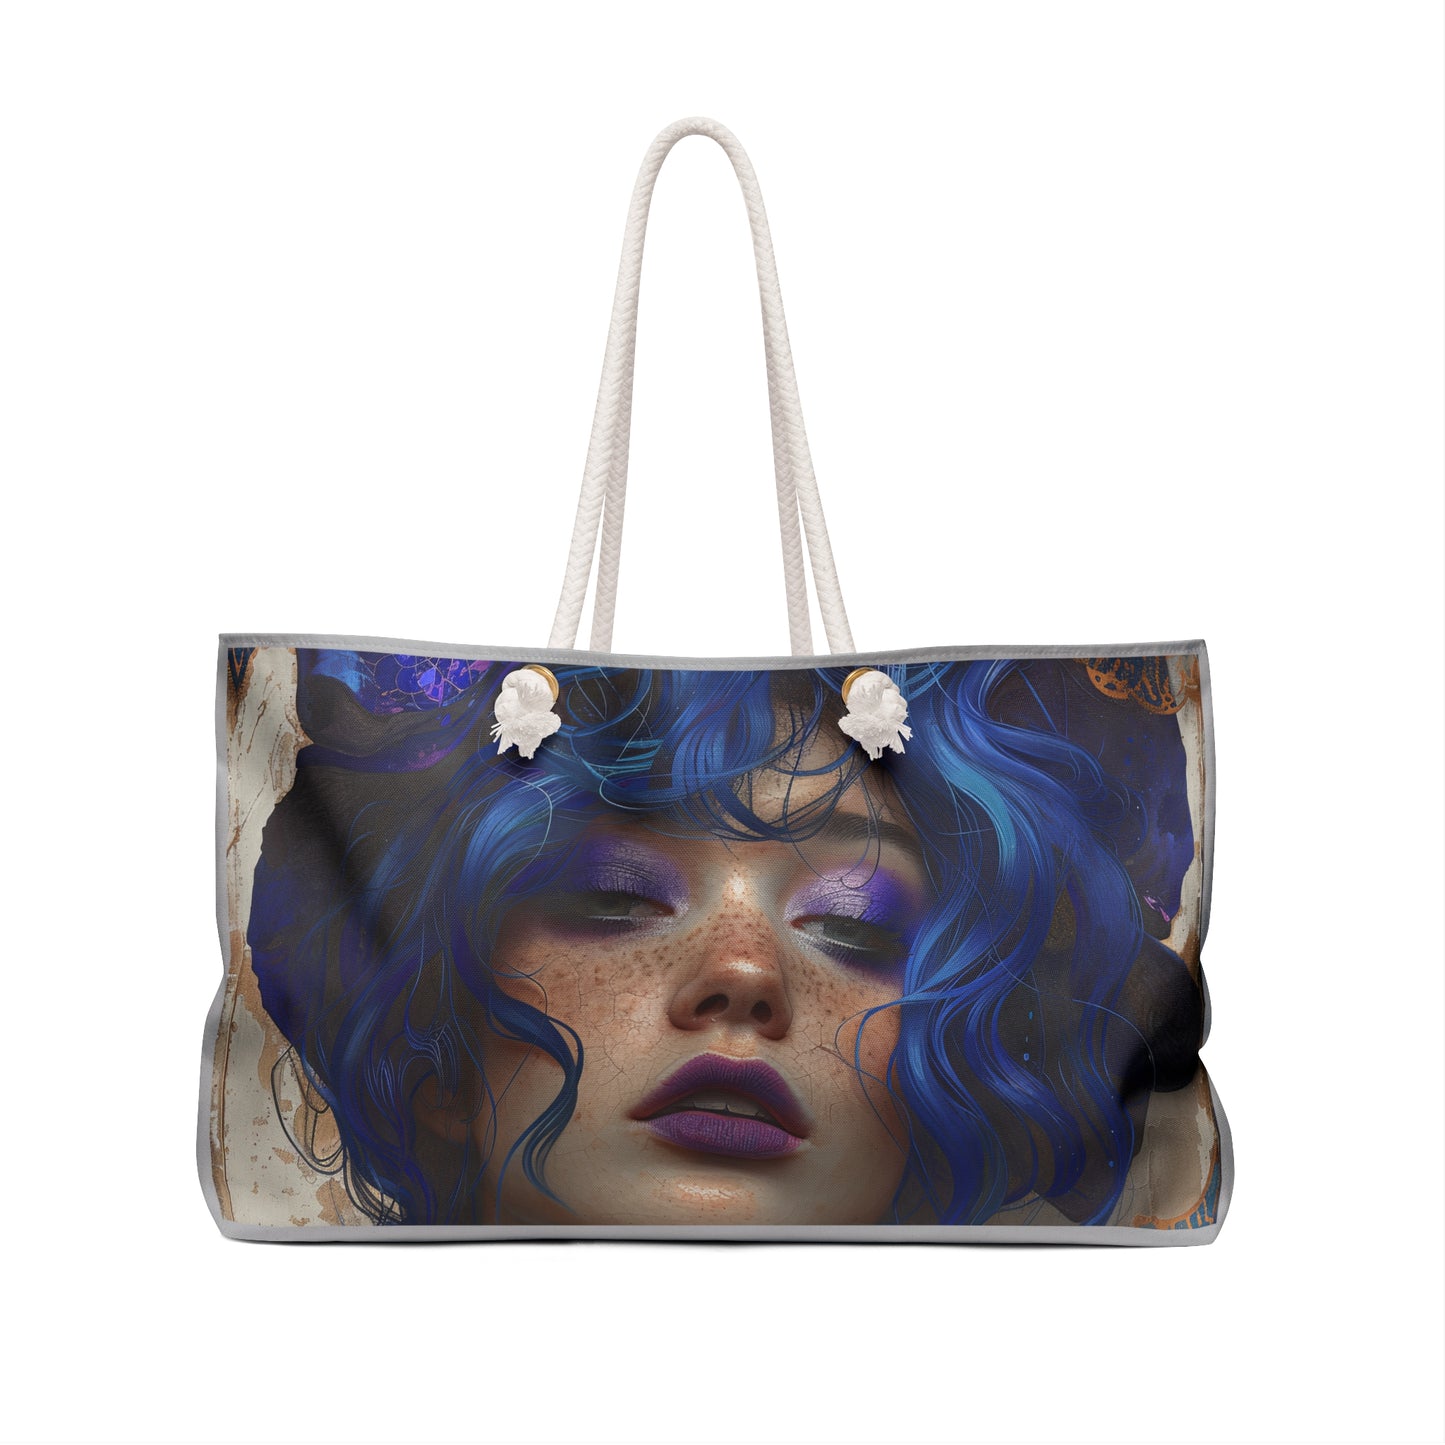 Weekender Bag: lady with blue and purple hair